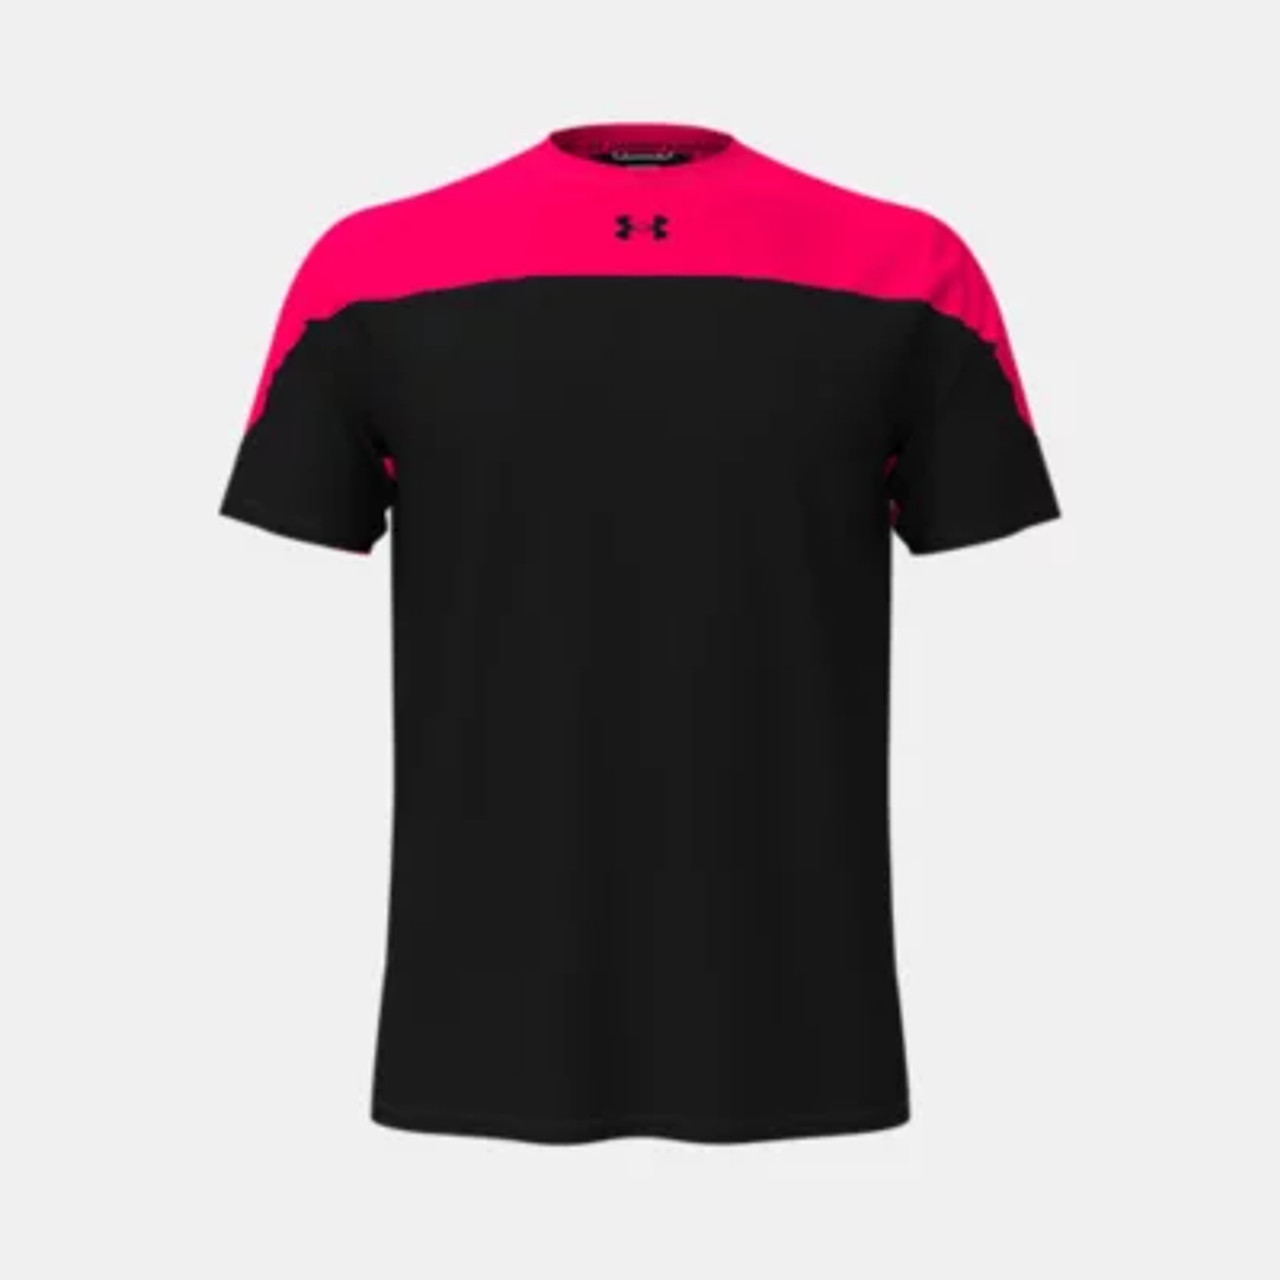 Under Armour Foundation Men's Tennis T-Shirt - Black/Red